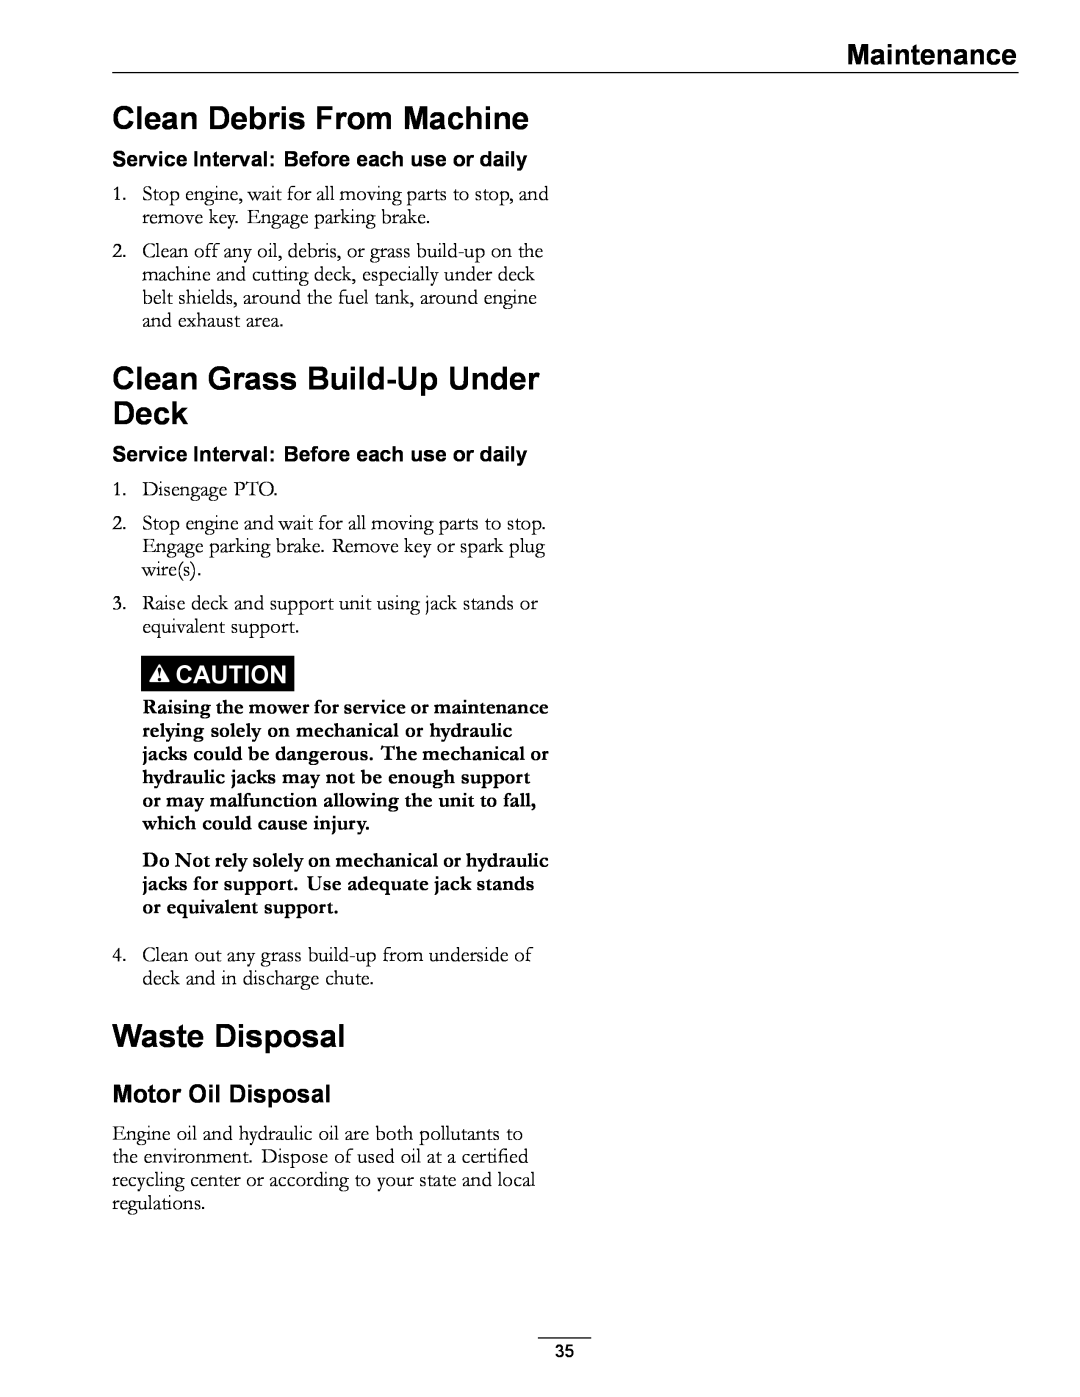 Exmark 4500-689 manual Clean Debris From Machine, Clean Grass Build-Up Under Deck, Waste Disposal, Motor Oil Disposal 